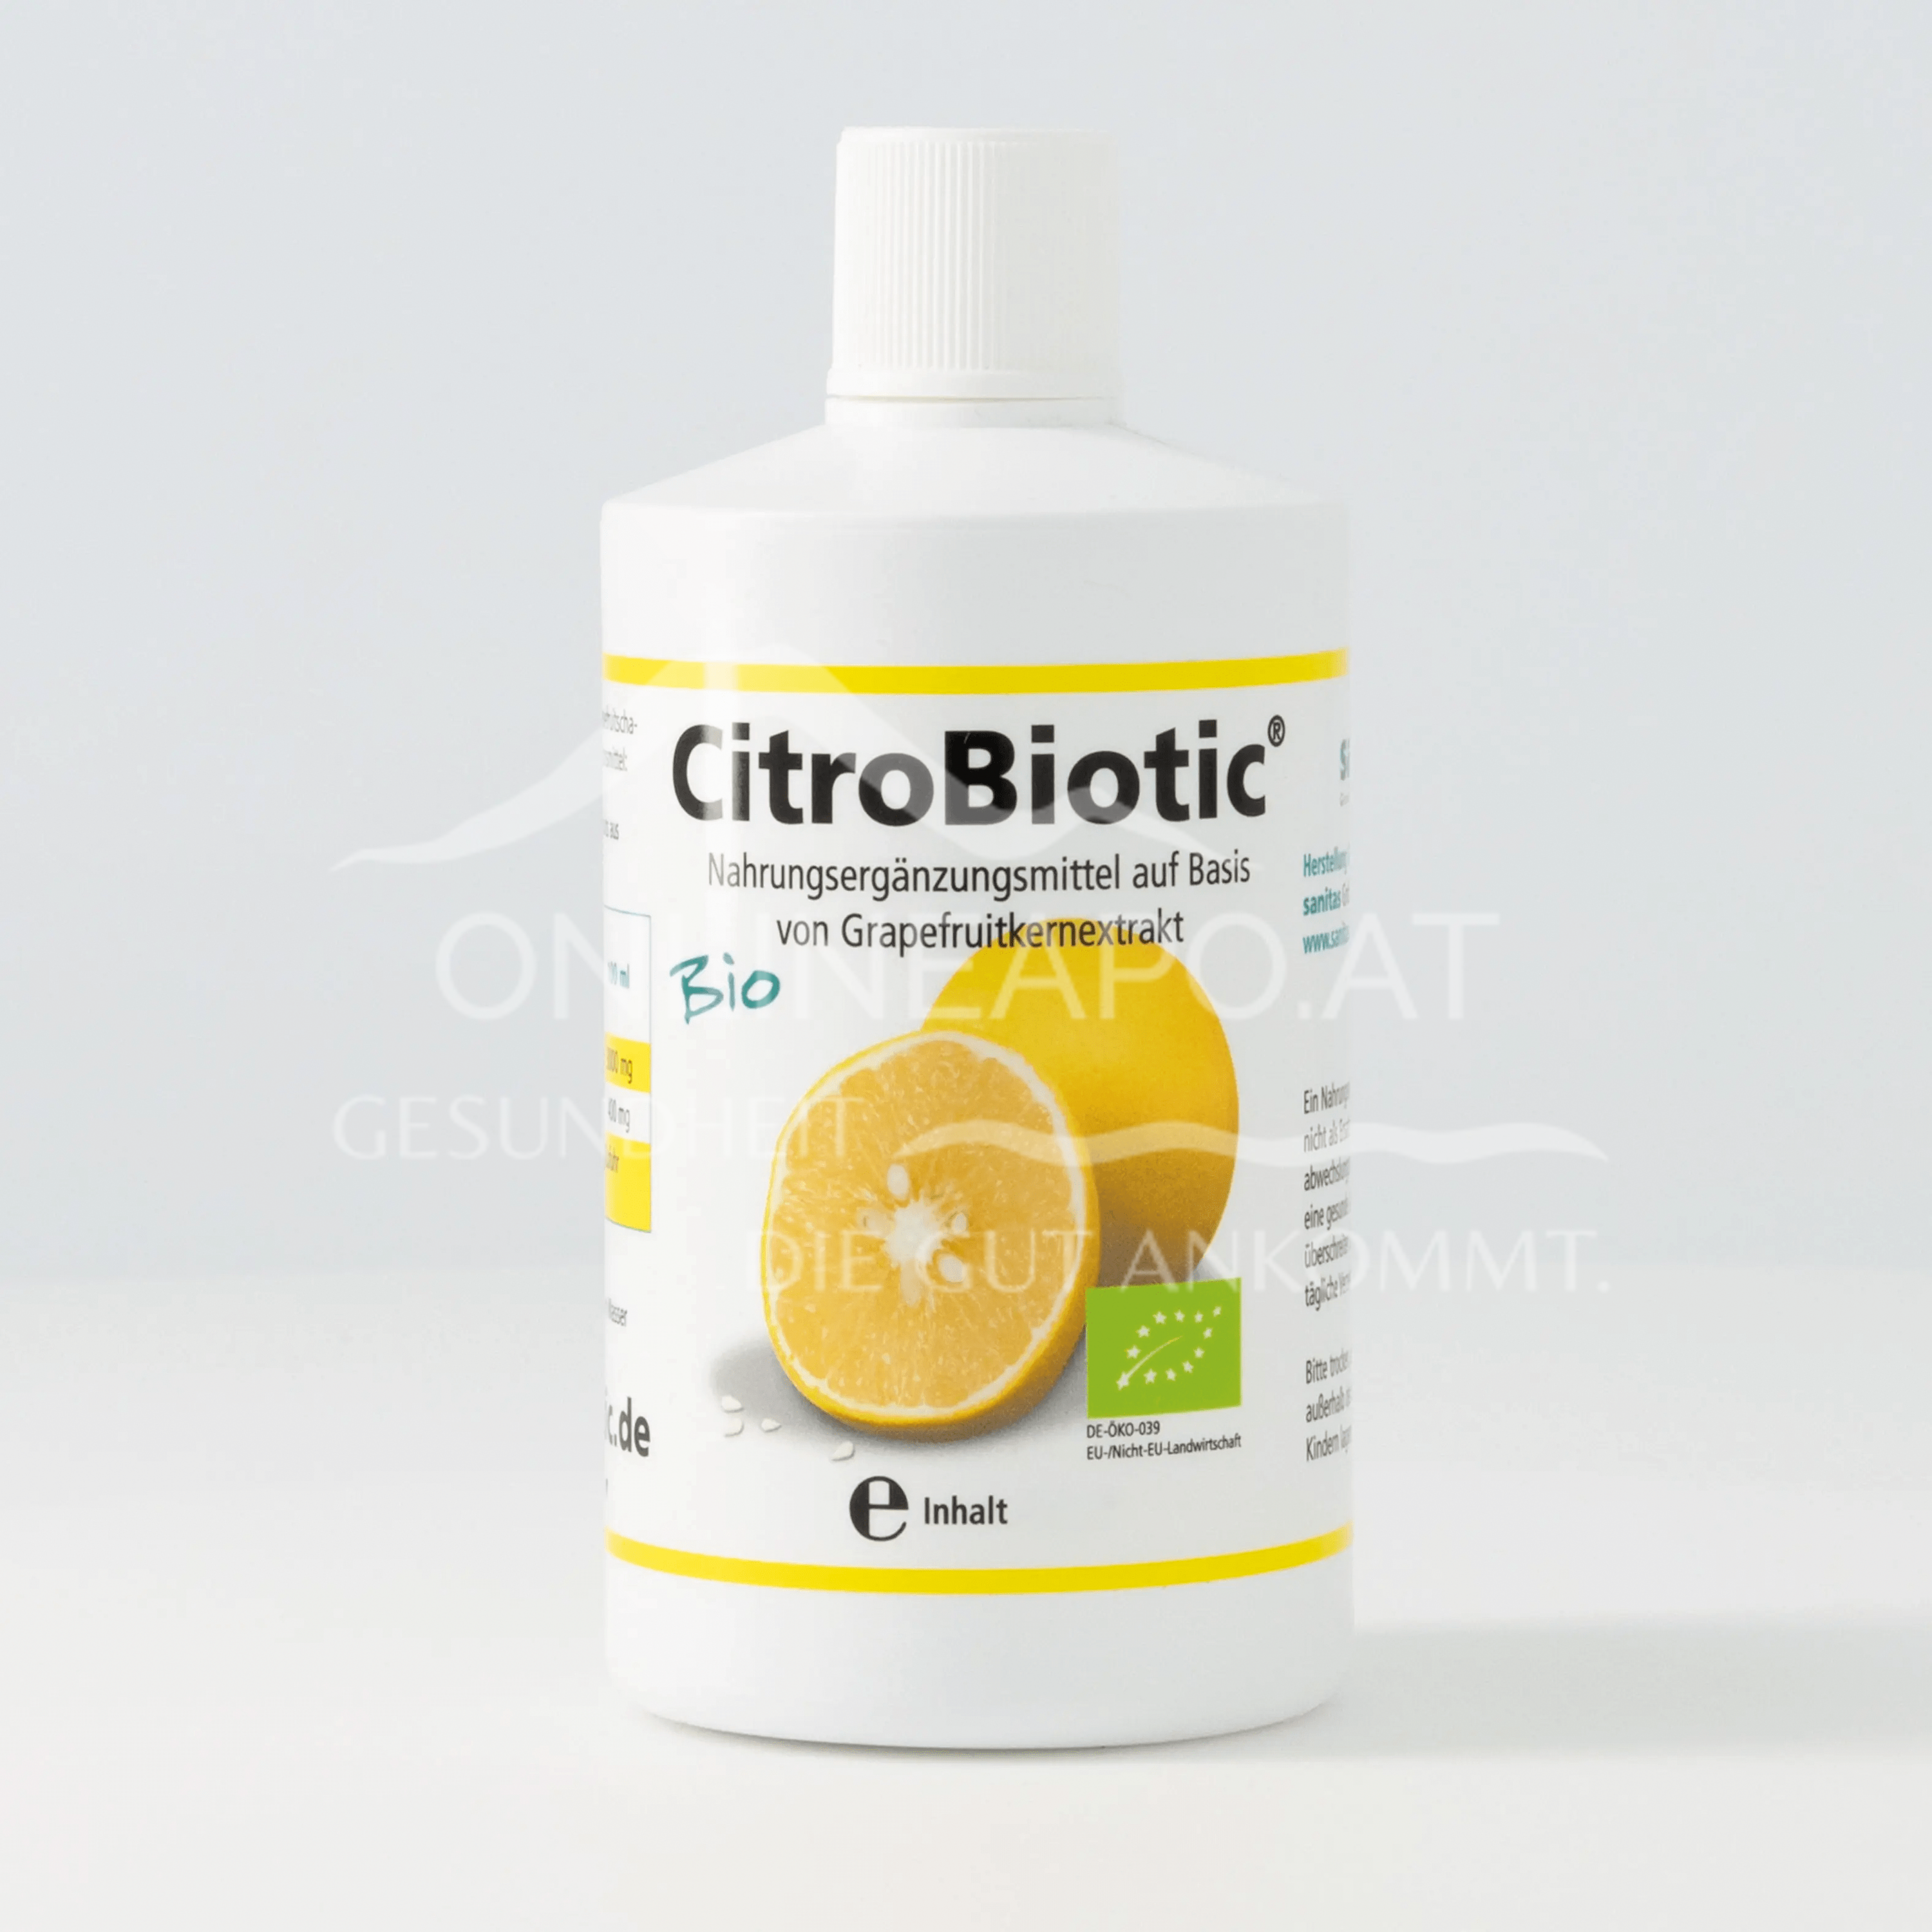 Caesaro med CitroBiotic Bio-Grapefruitkernextrakt Lösung